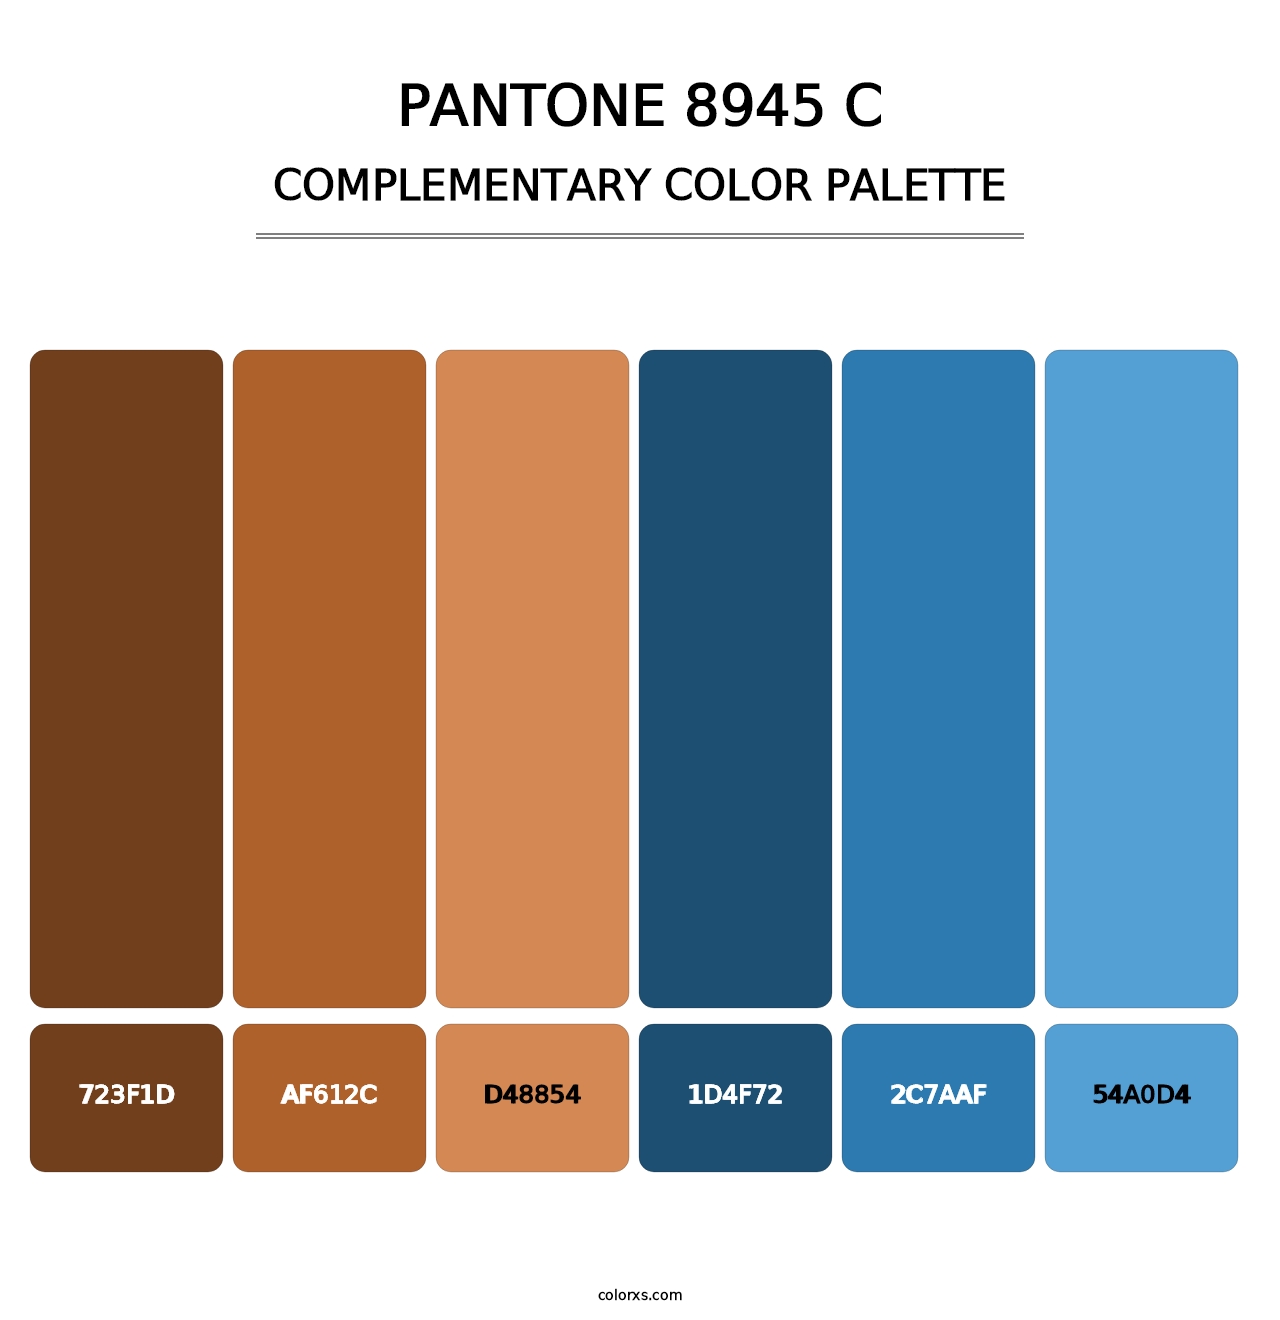 PANTONE 8945 C - Complementary Color Palette